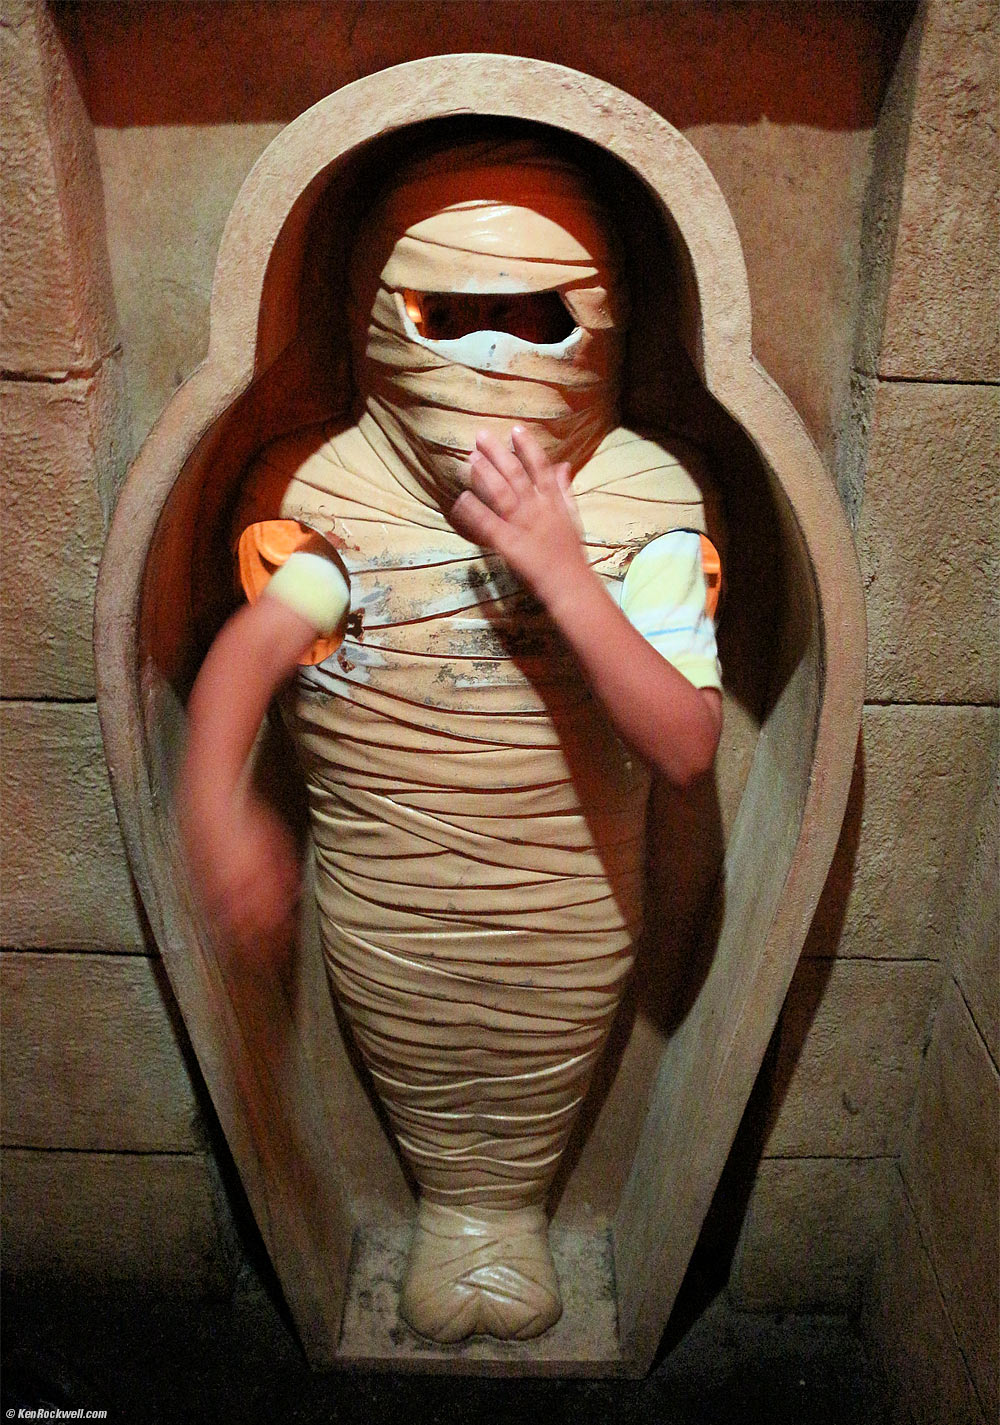 Ryan the Mummy.